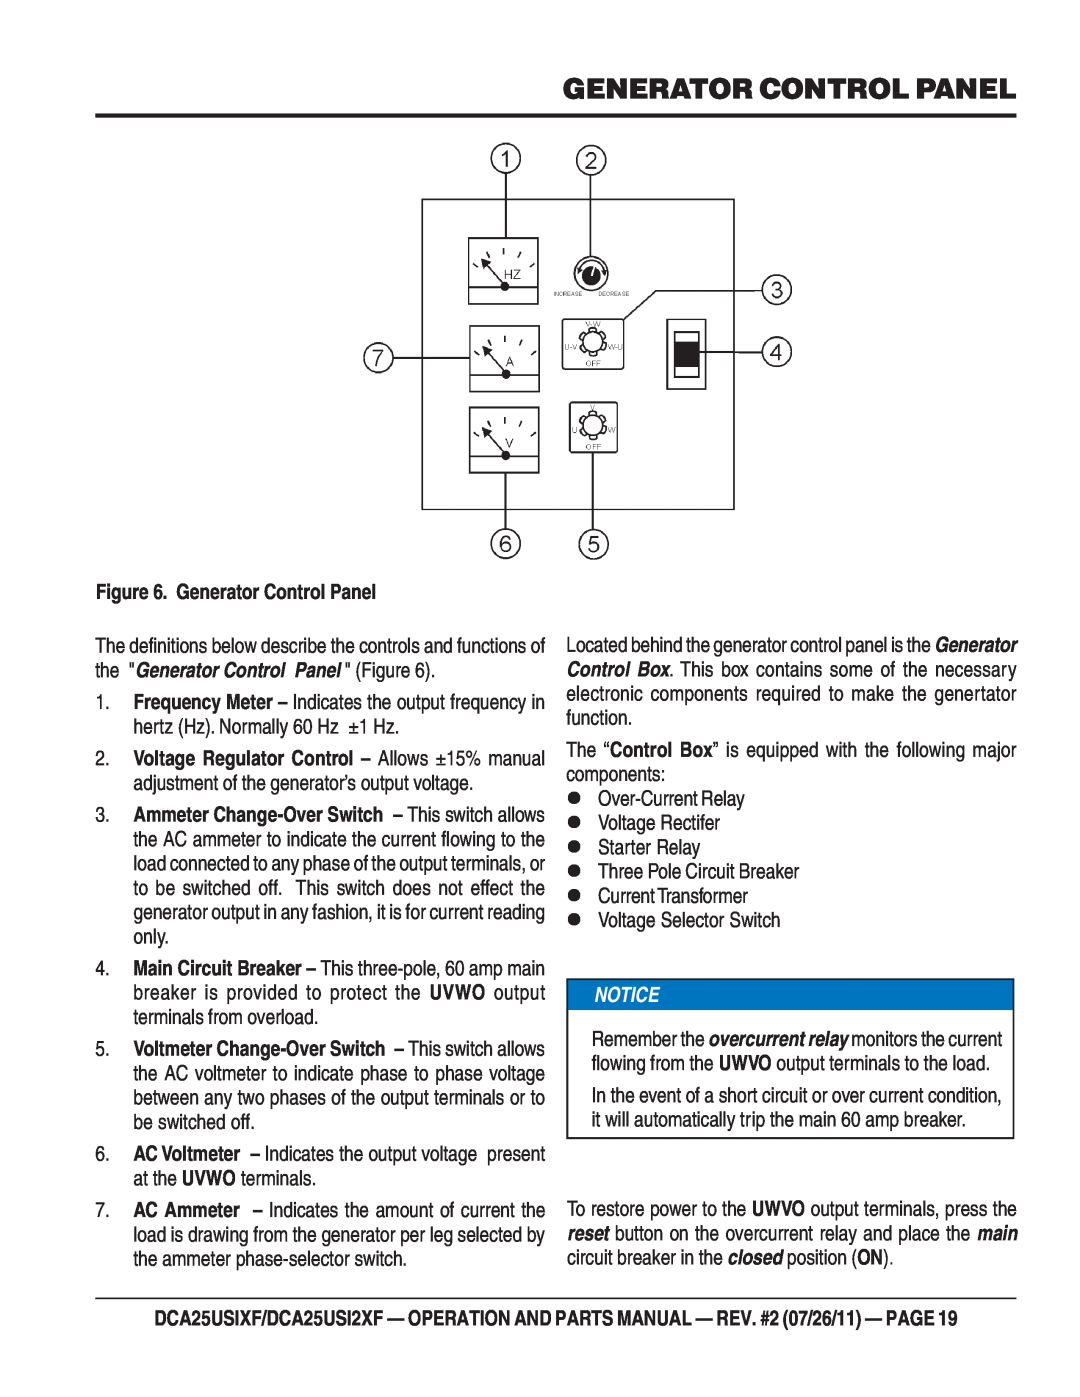 Multiquip DCA25USI2XF, DCA25USIXF operation manual Generator Control Panel 